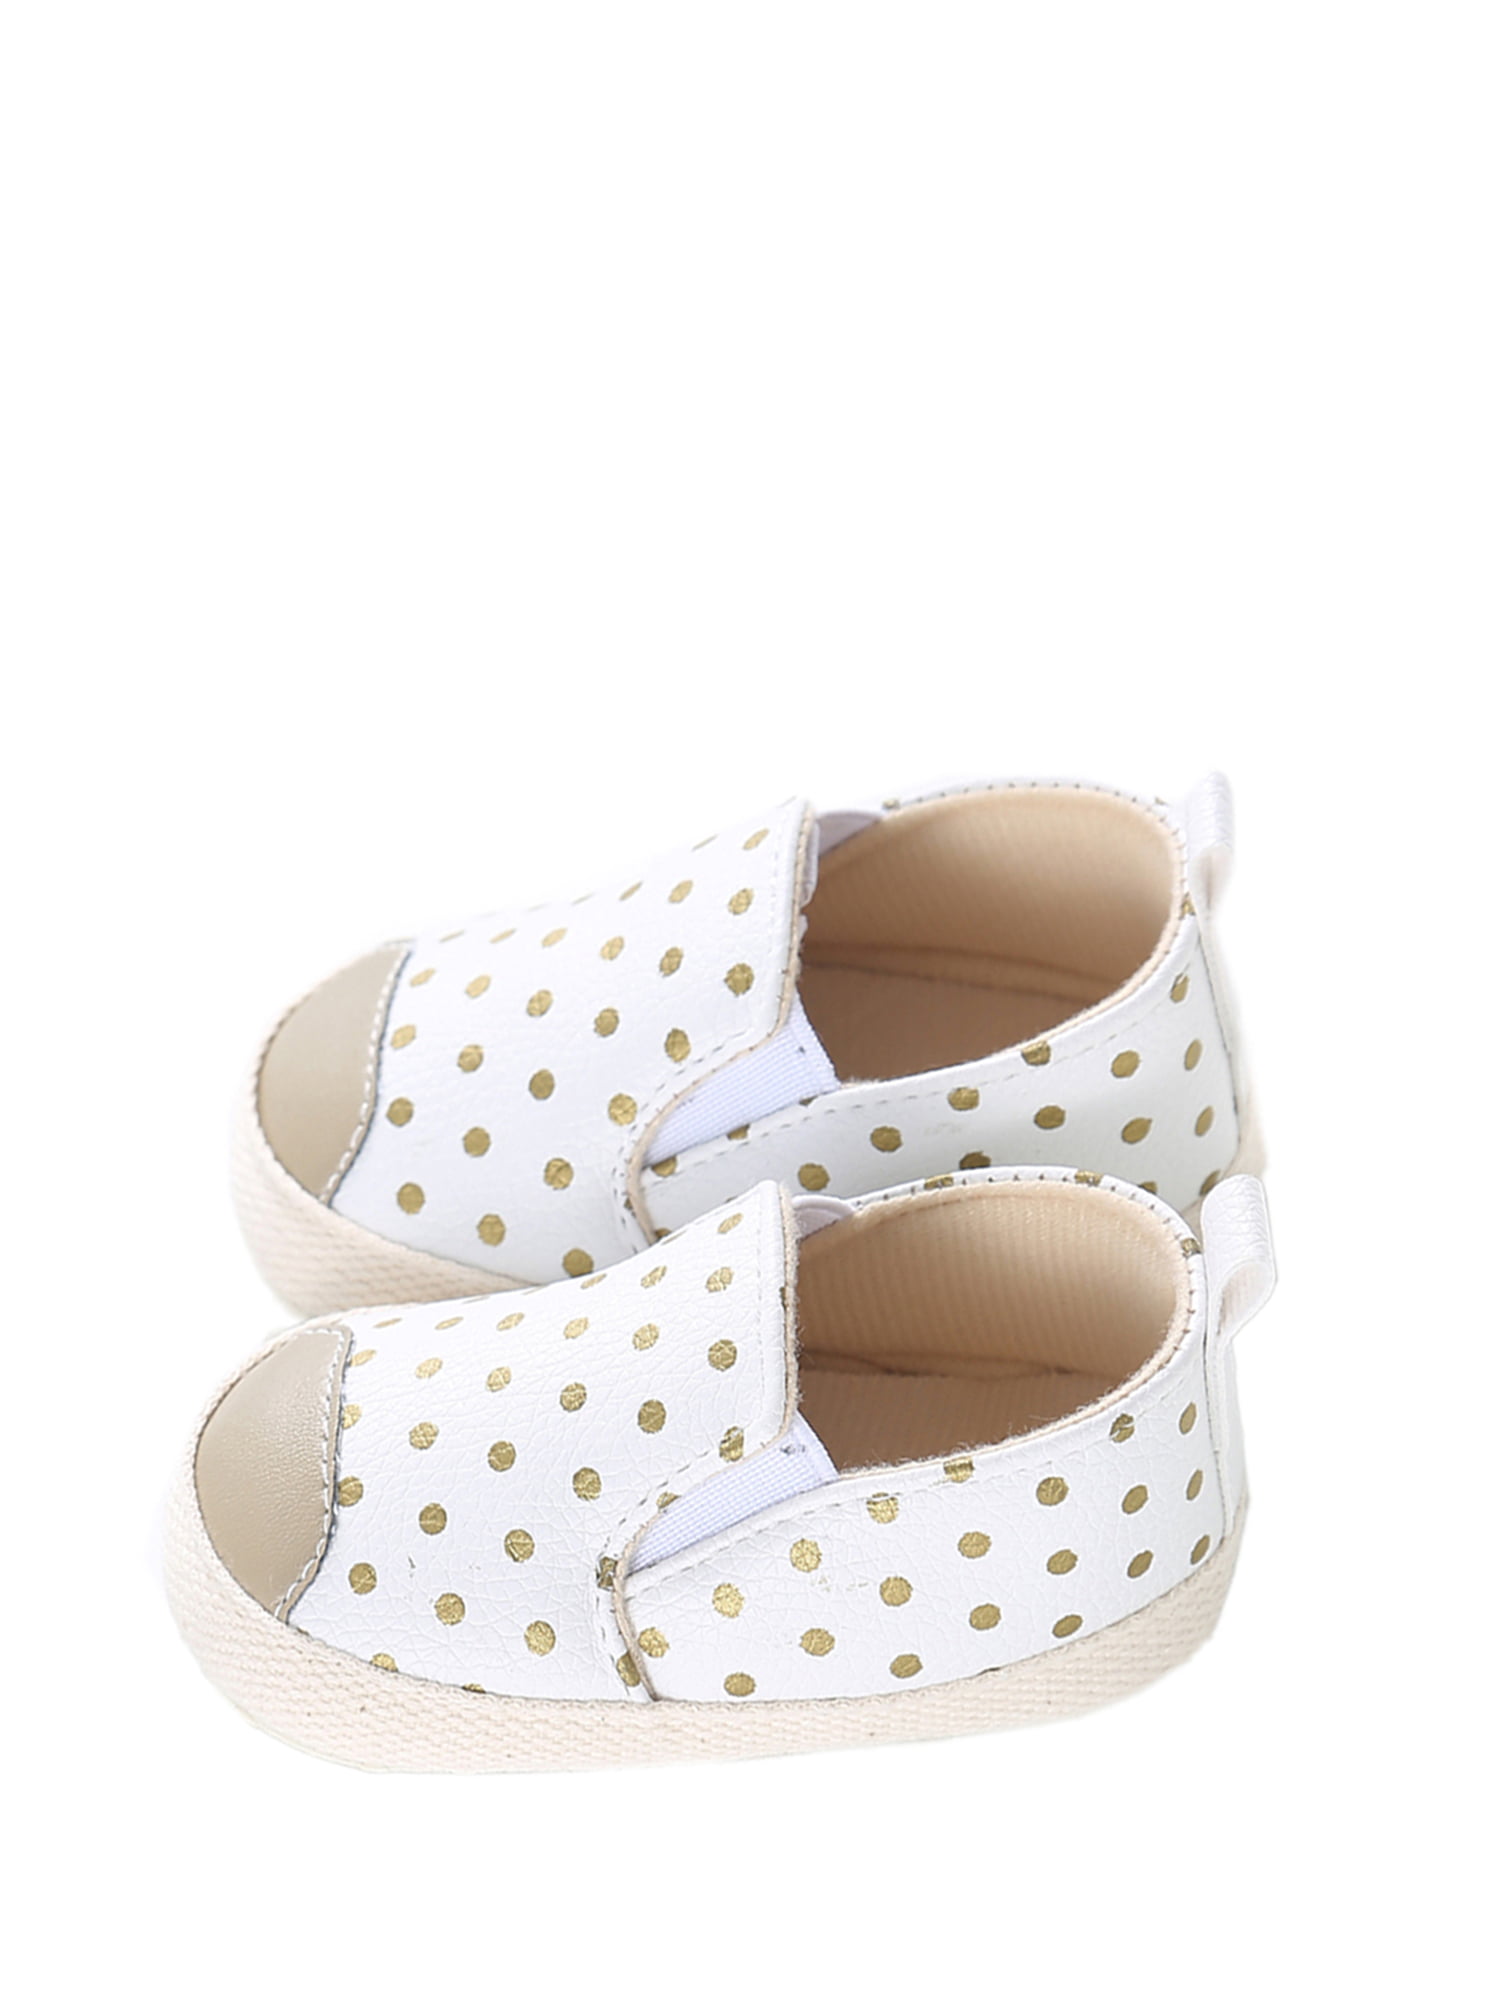 New Girls Soft Baby Slippers Black White Polka Dots Mary Jane Shoes SZ 6-12mos 